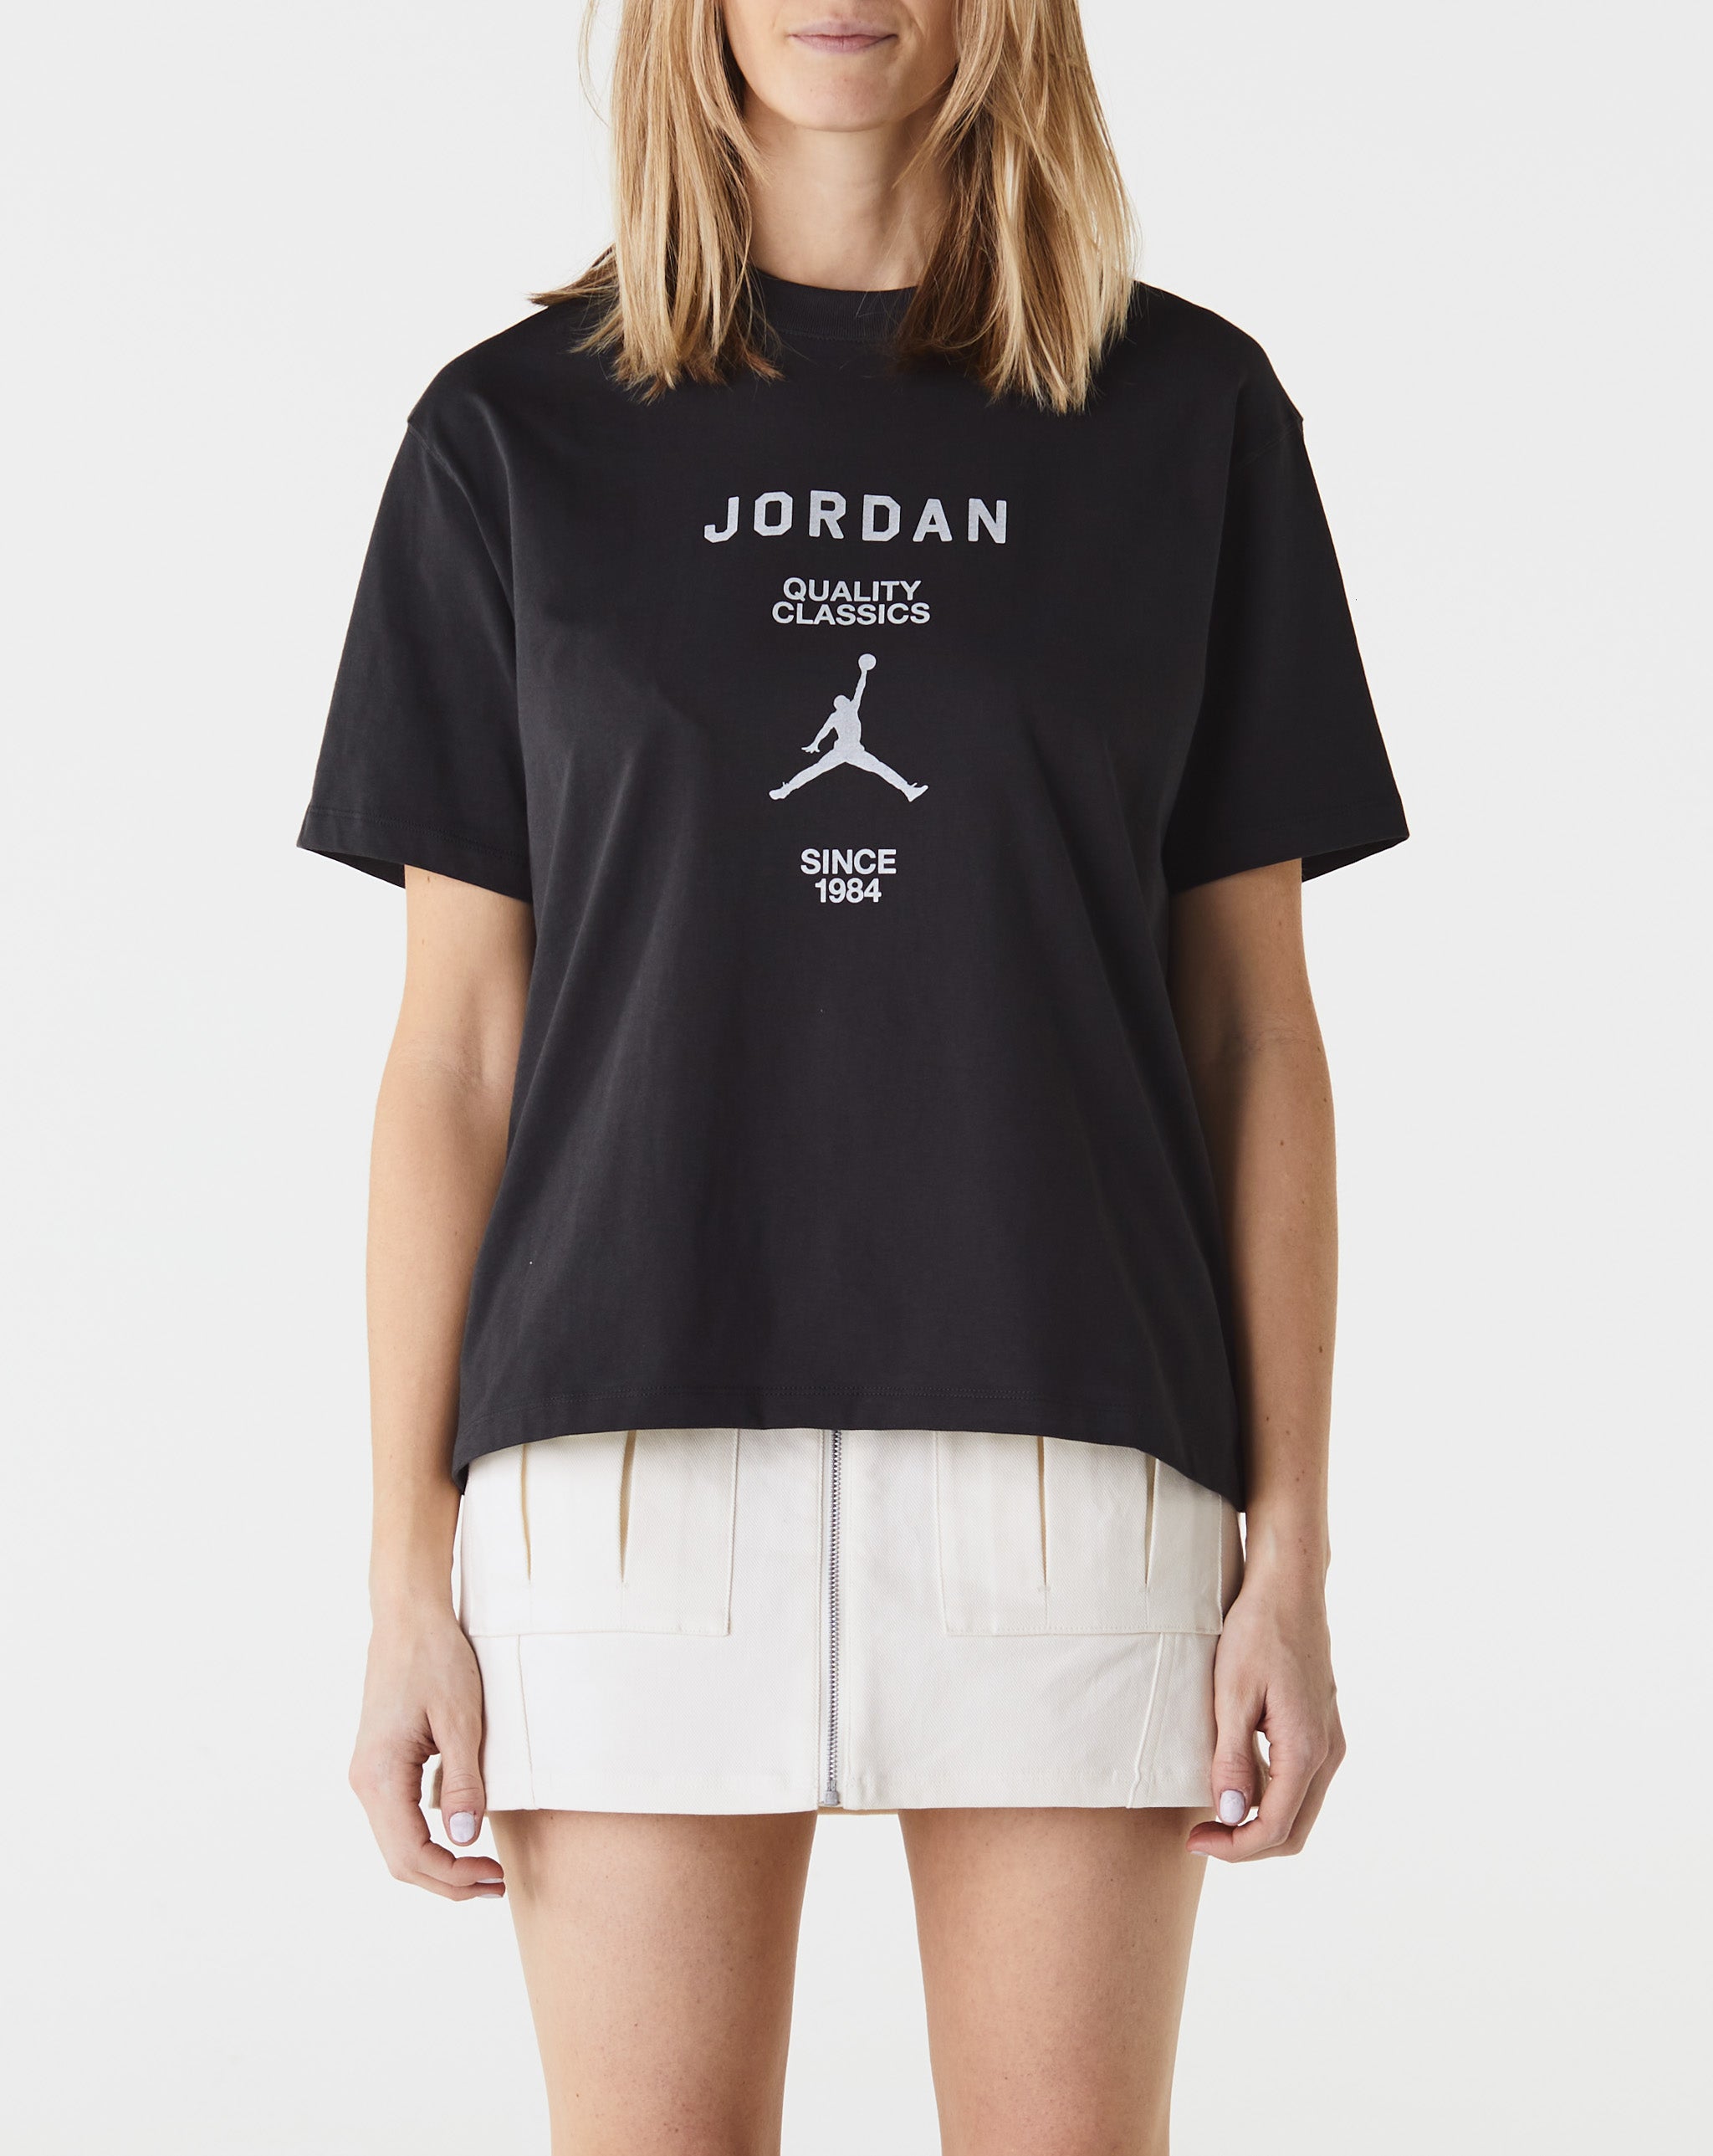 Air jordan the Women's jordan the Quality Classics T-Shirt  - Cheap 127-0 Jordan outlet